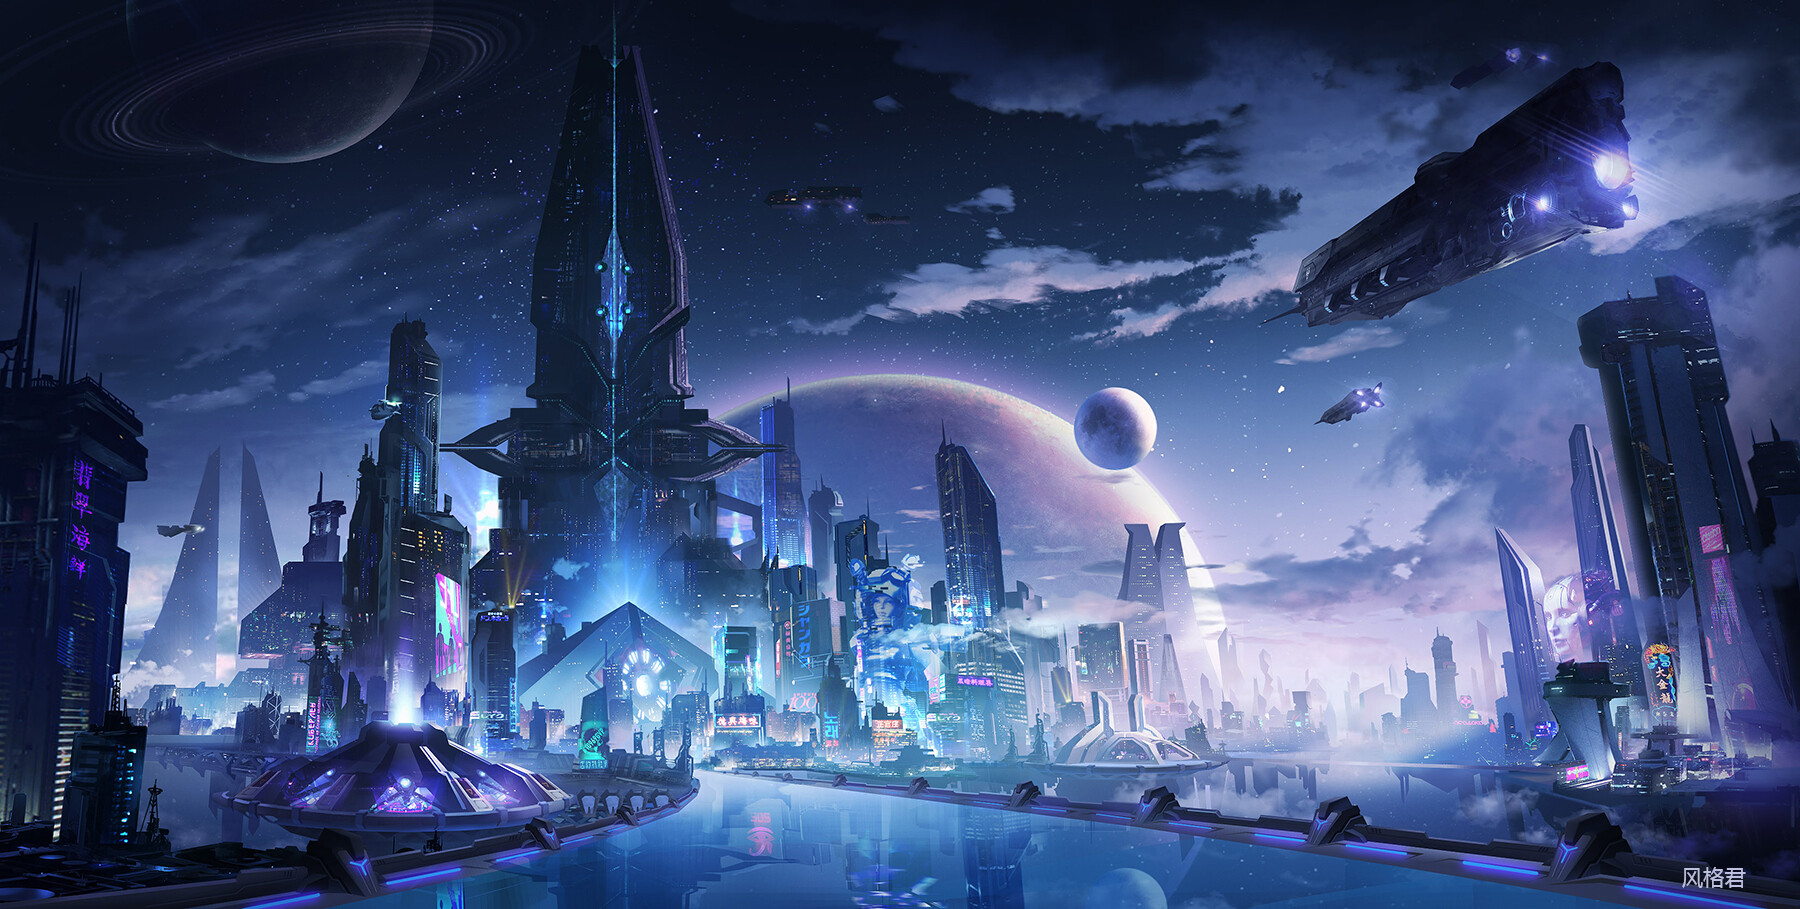 Jun Zhang Fantasy Art Digital Art Landscape Fantasy City Science Fiction Spaceship Futuristic City 1800x909